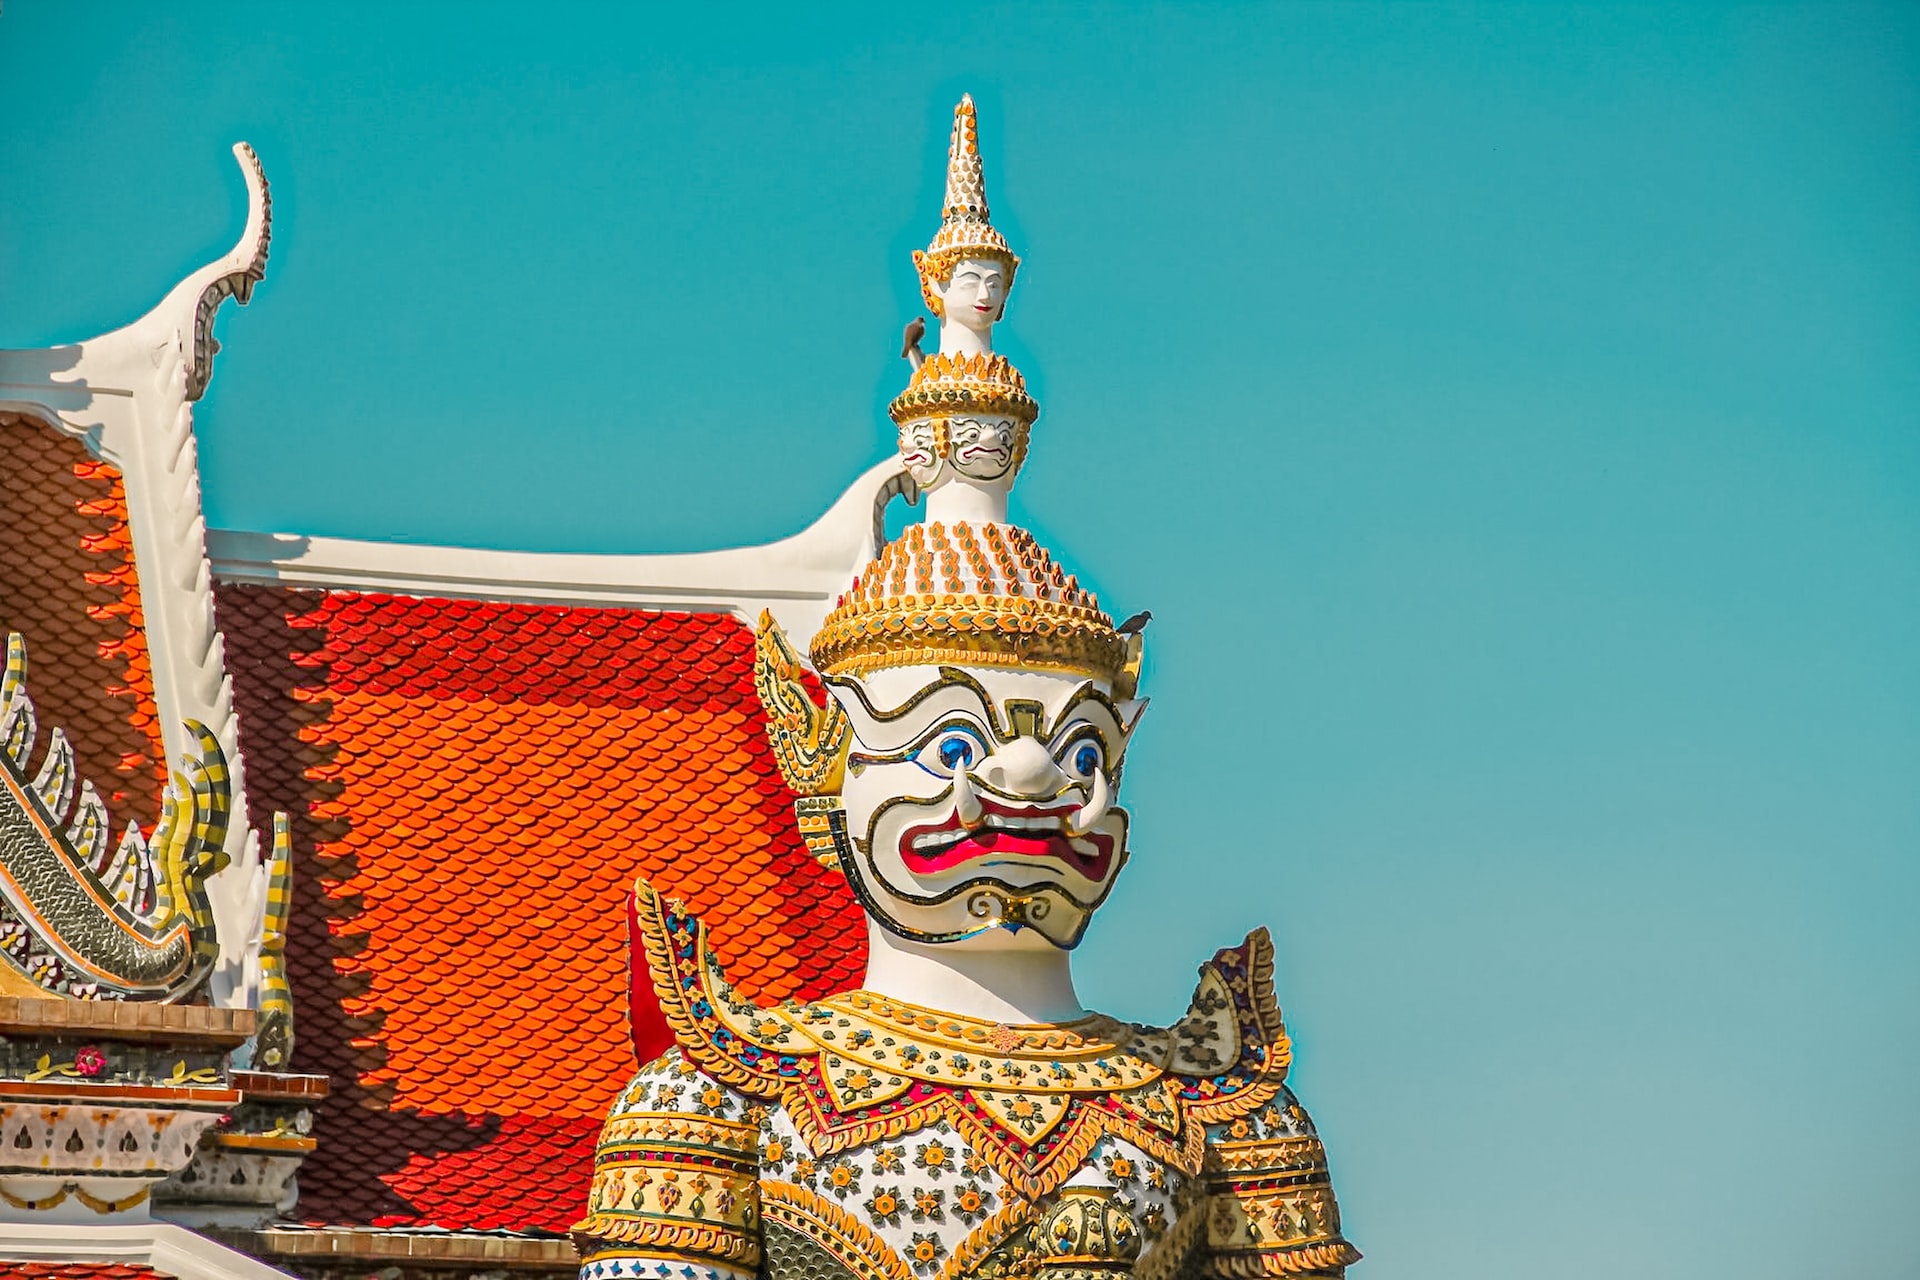 A large figure at Wat Arun temple, Bangkok.